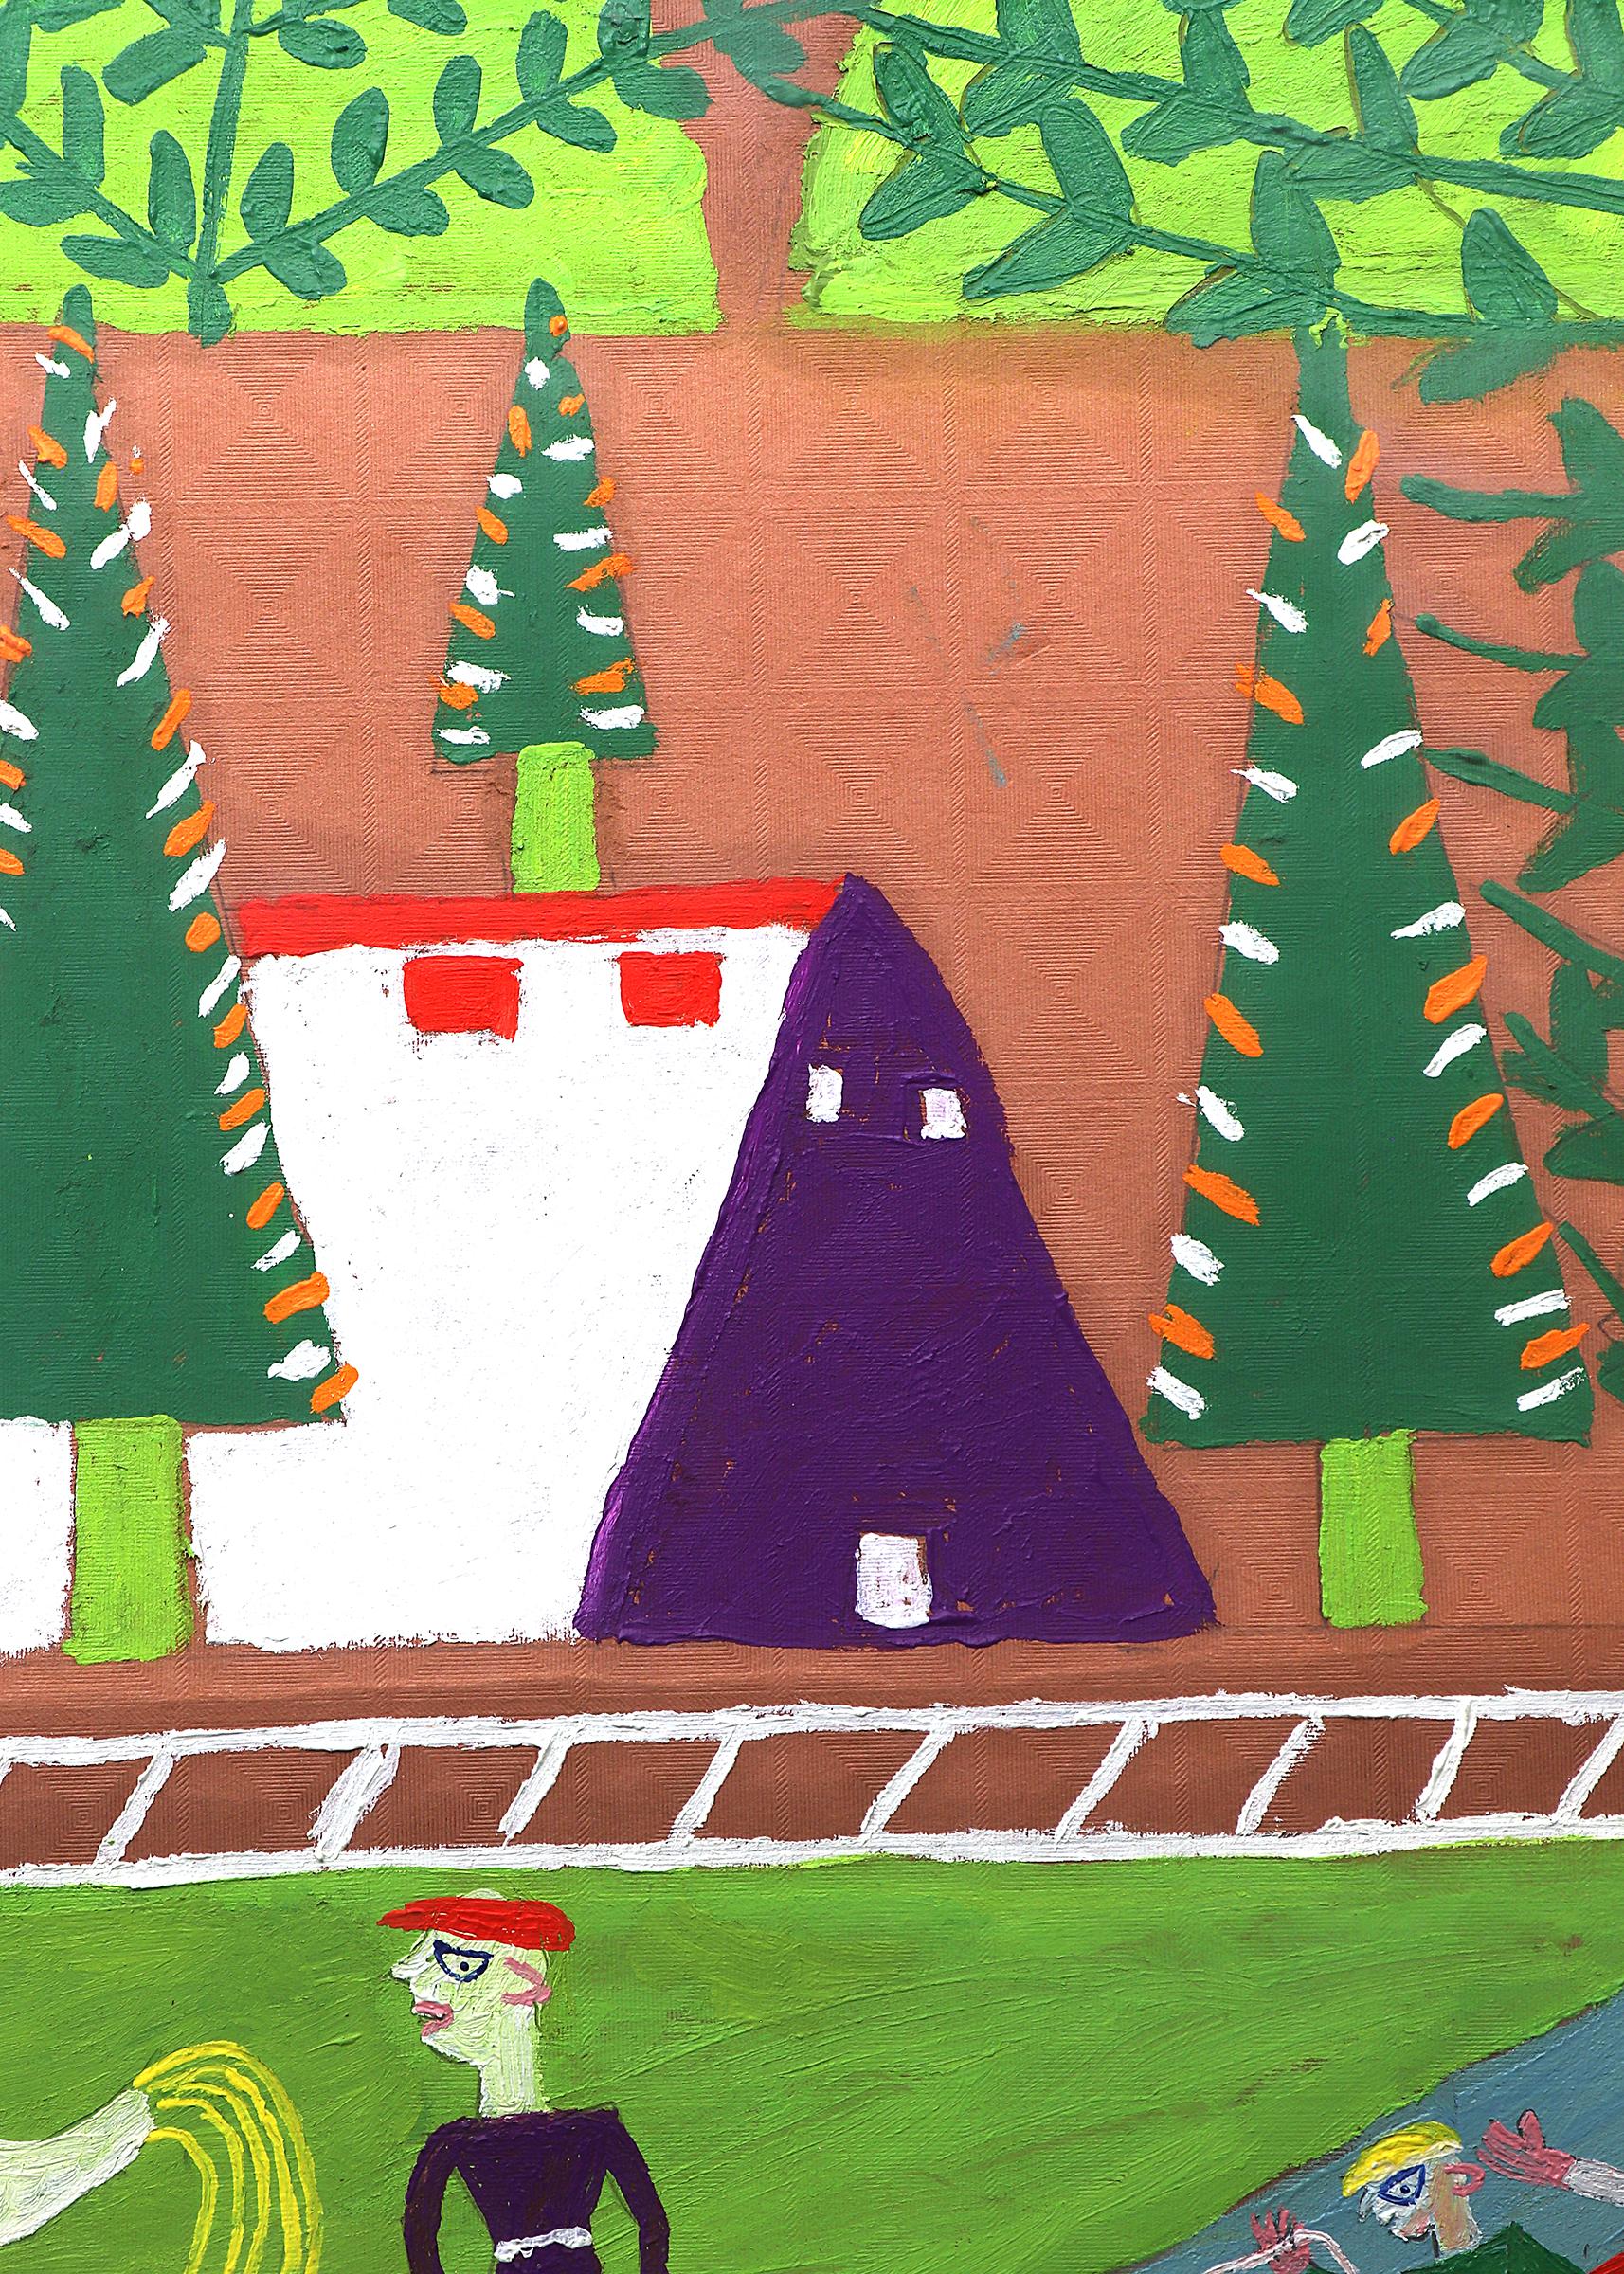 Chicken Farm, Figurative Folk Art Landscape Oil Painting, Vertical Vibrant Color 2